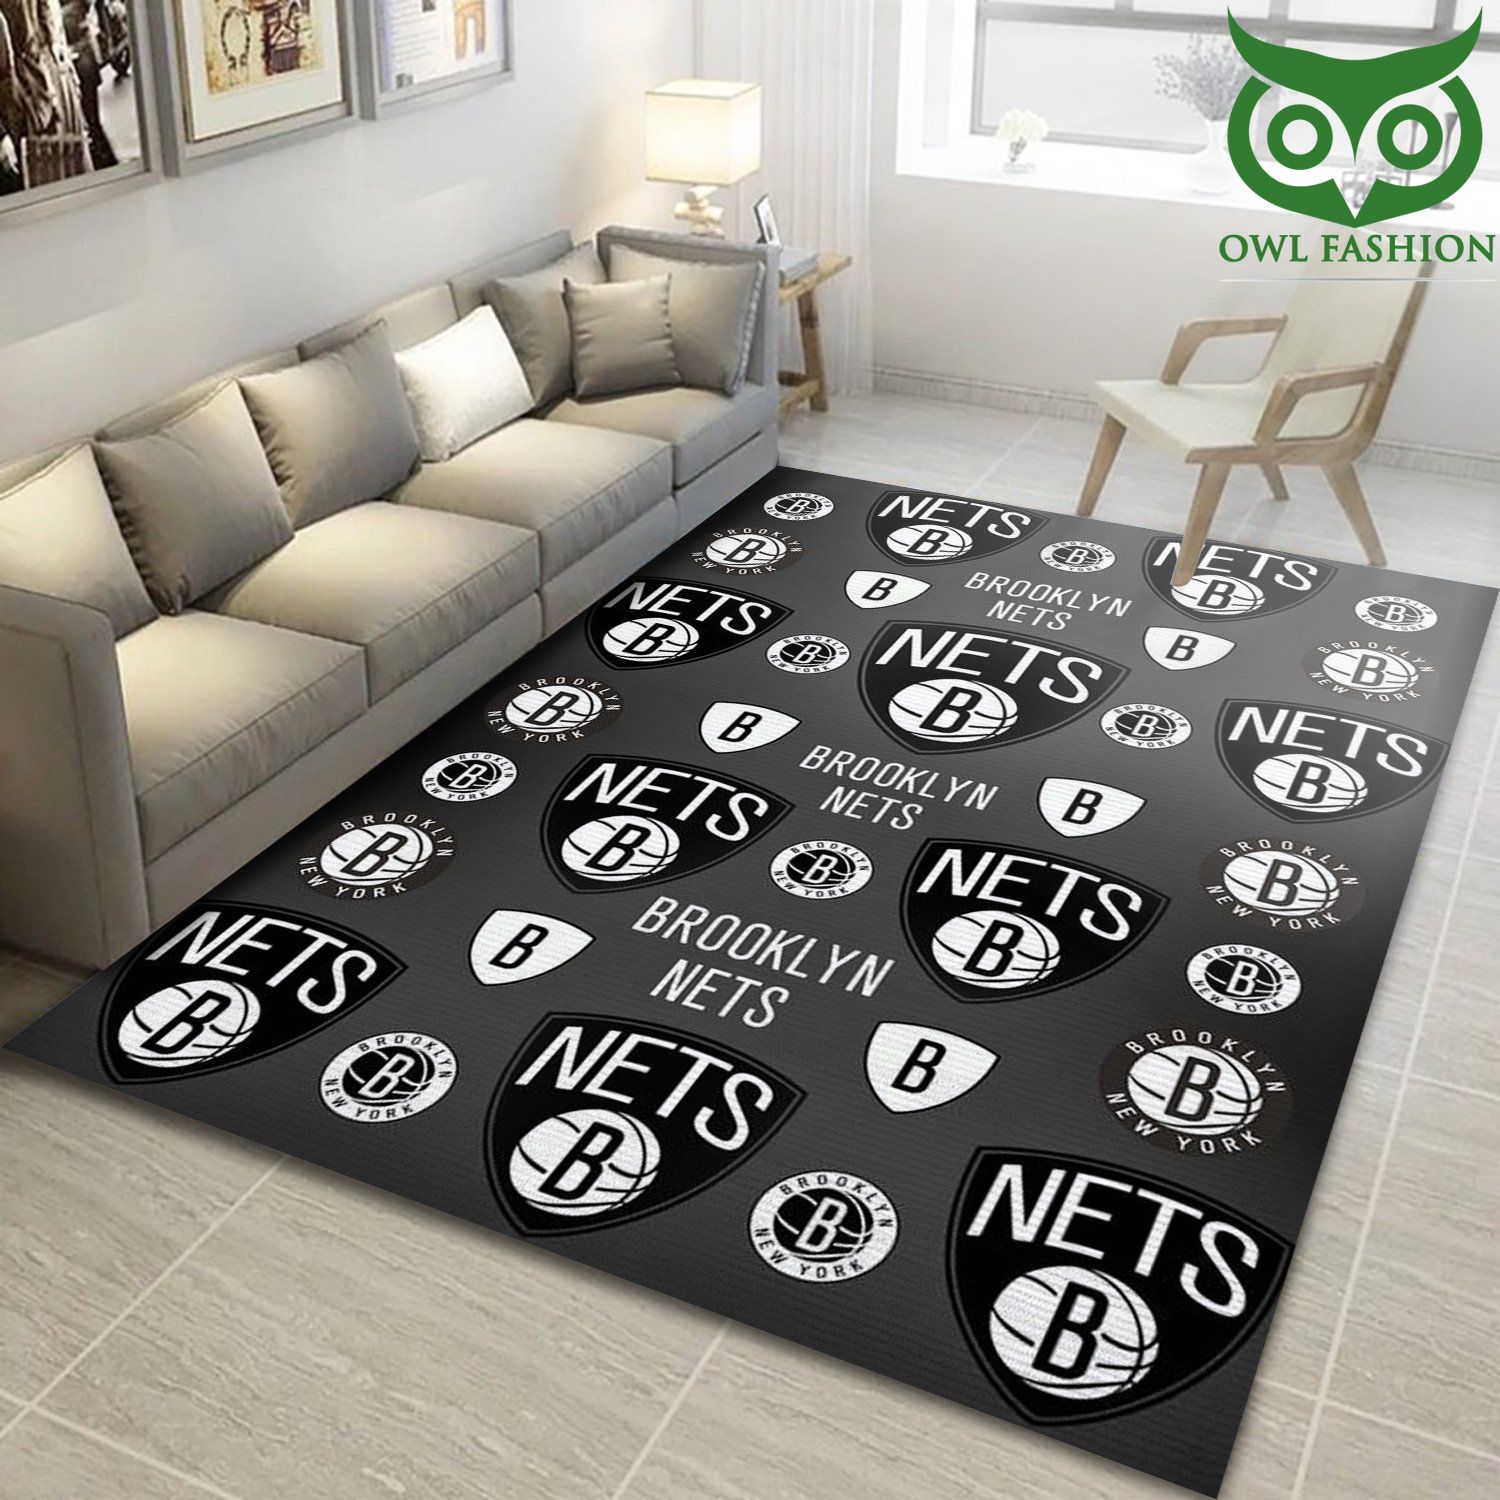 NBA Brooklyn Nets Team Area carpet rug Home and floor Decor